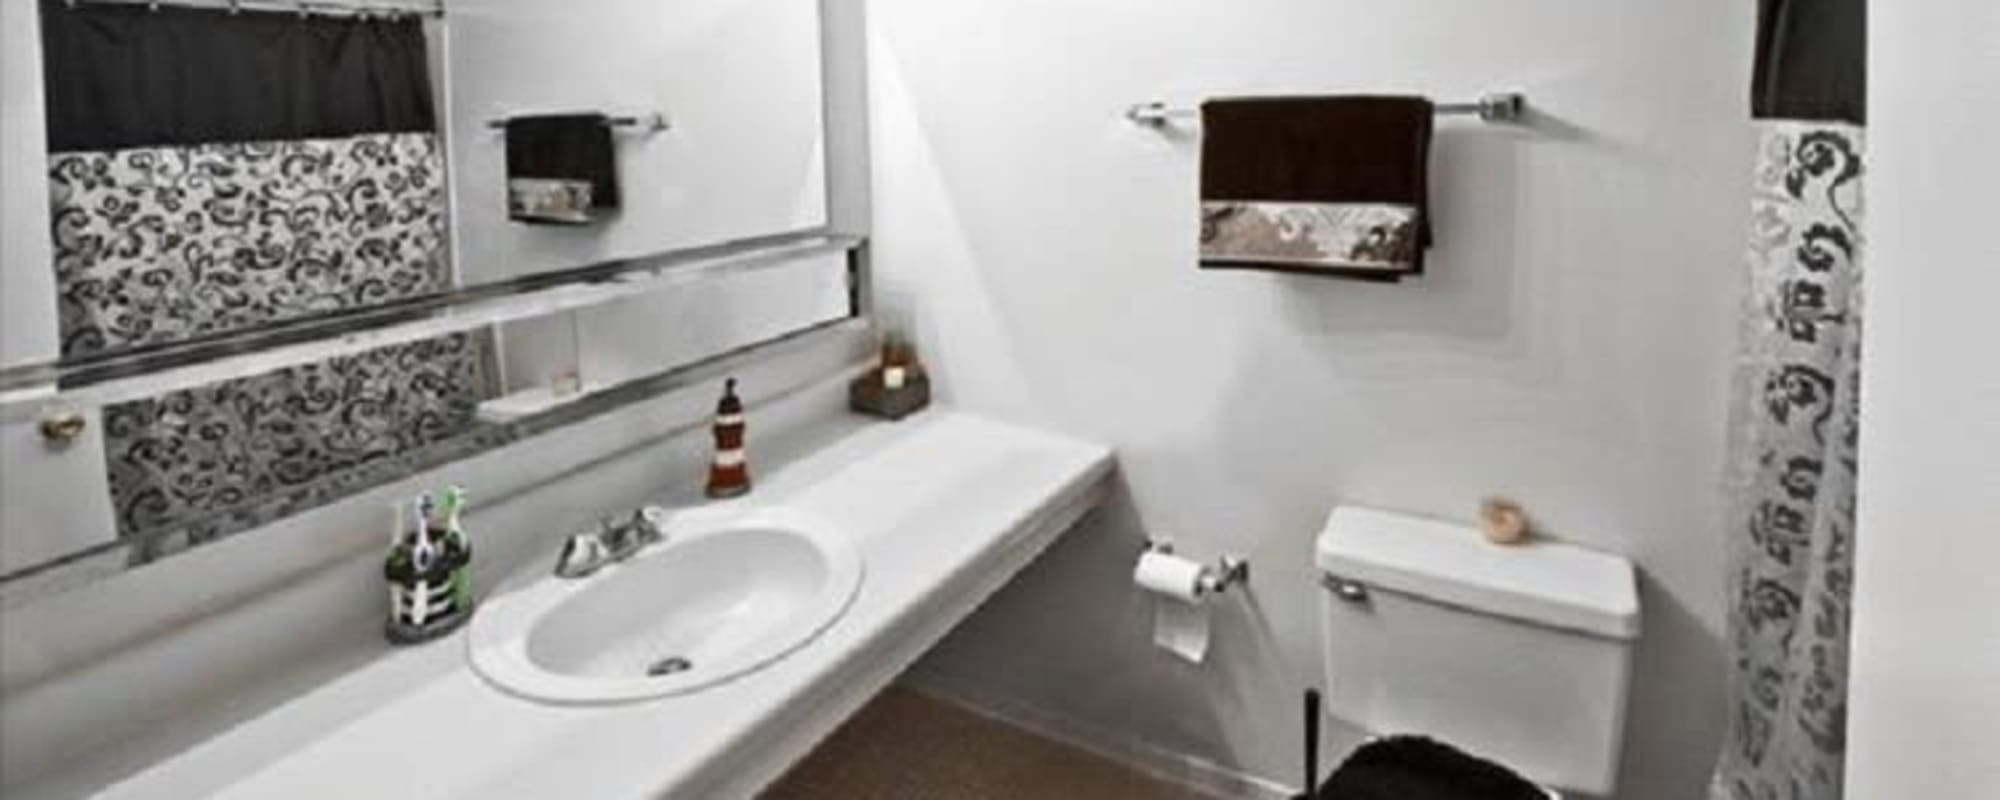 Apartment bathroom at Towne Crest in Gaithersburg, Maryland